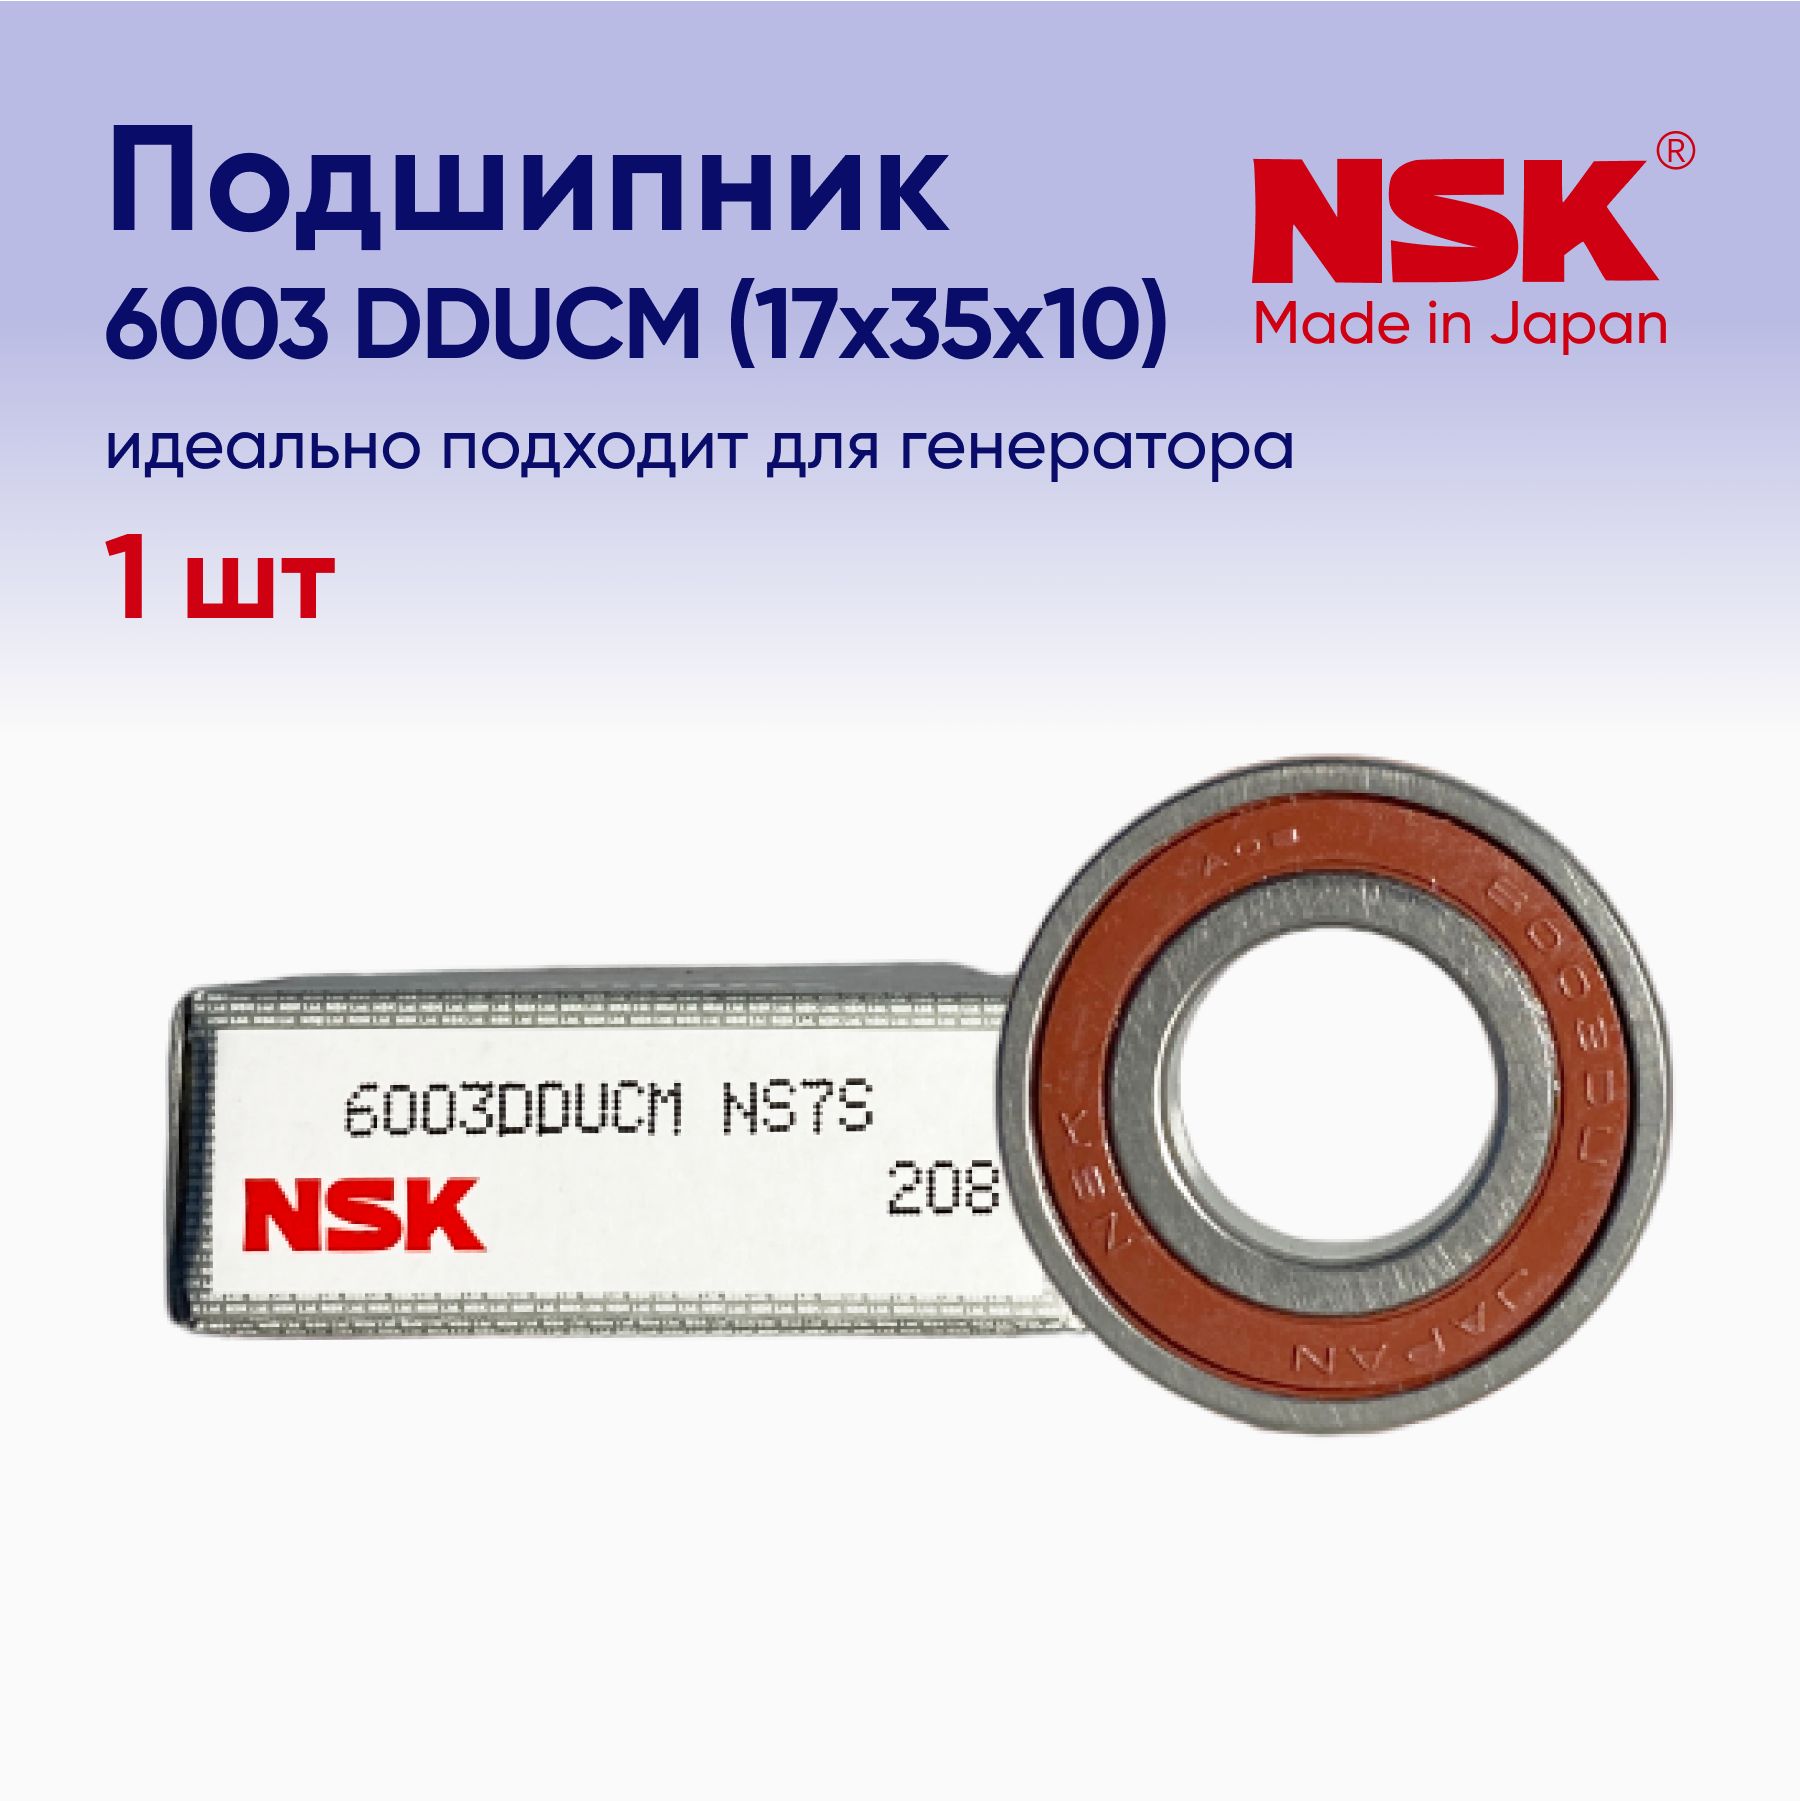 Nsk генератор. NSK 6003dducm подшипник генератора. Подшипник NSK 6003. NSK 6003dg8b. Подшипник NSK 6003 VV.